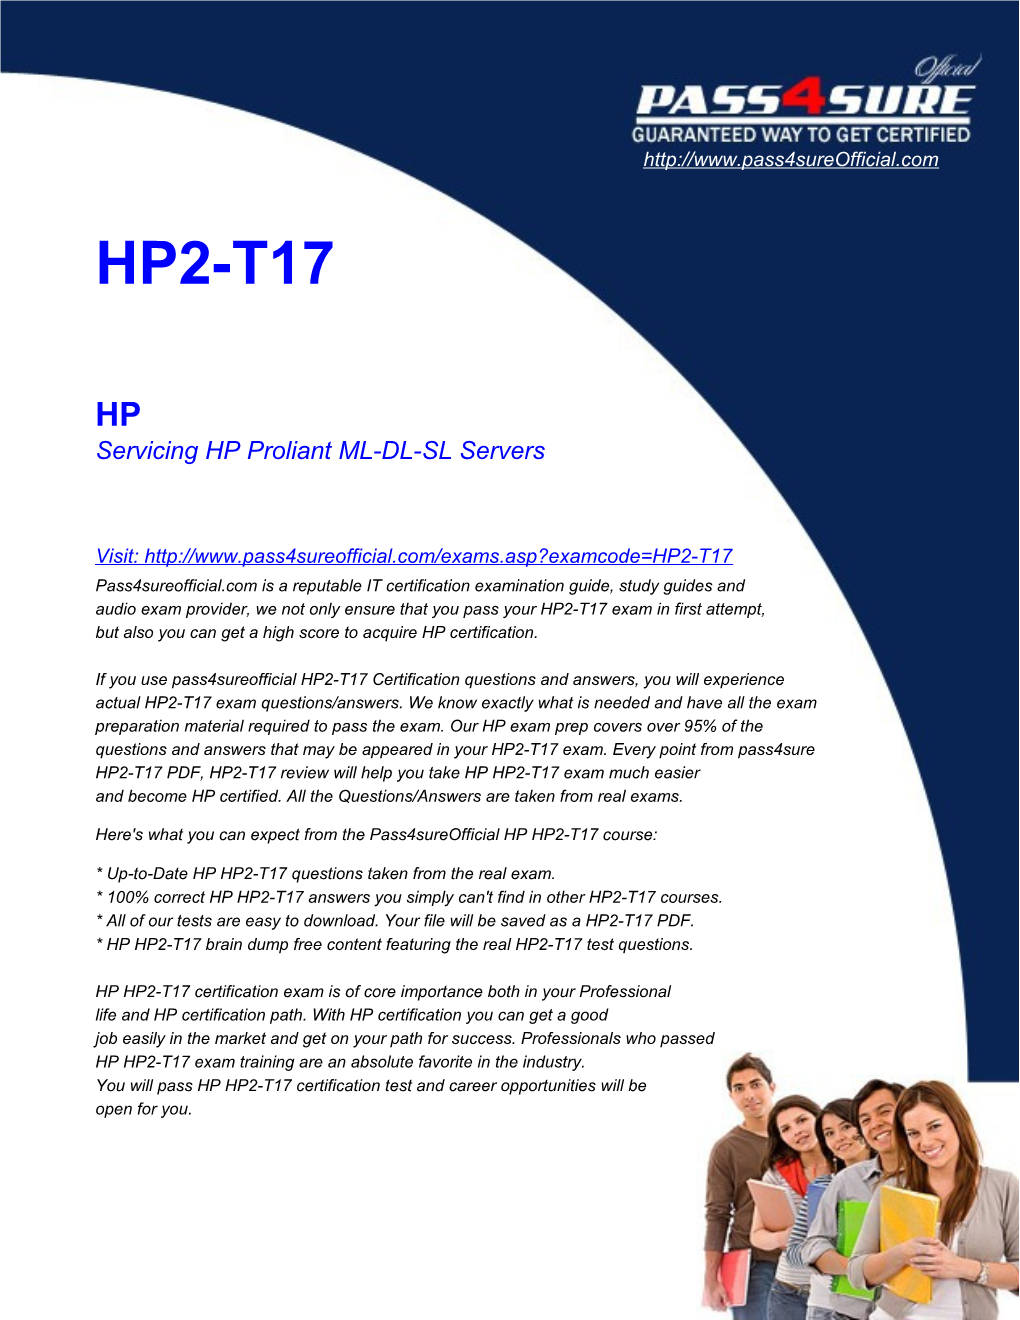 Servicing HP Proliant ML-DL-SL Servers